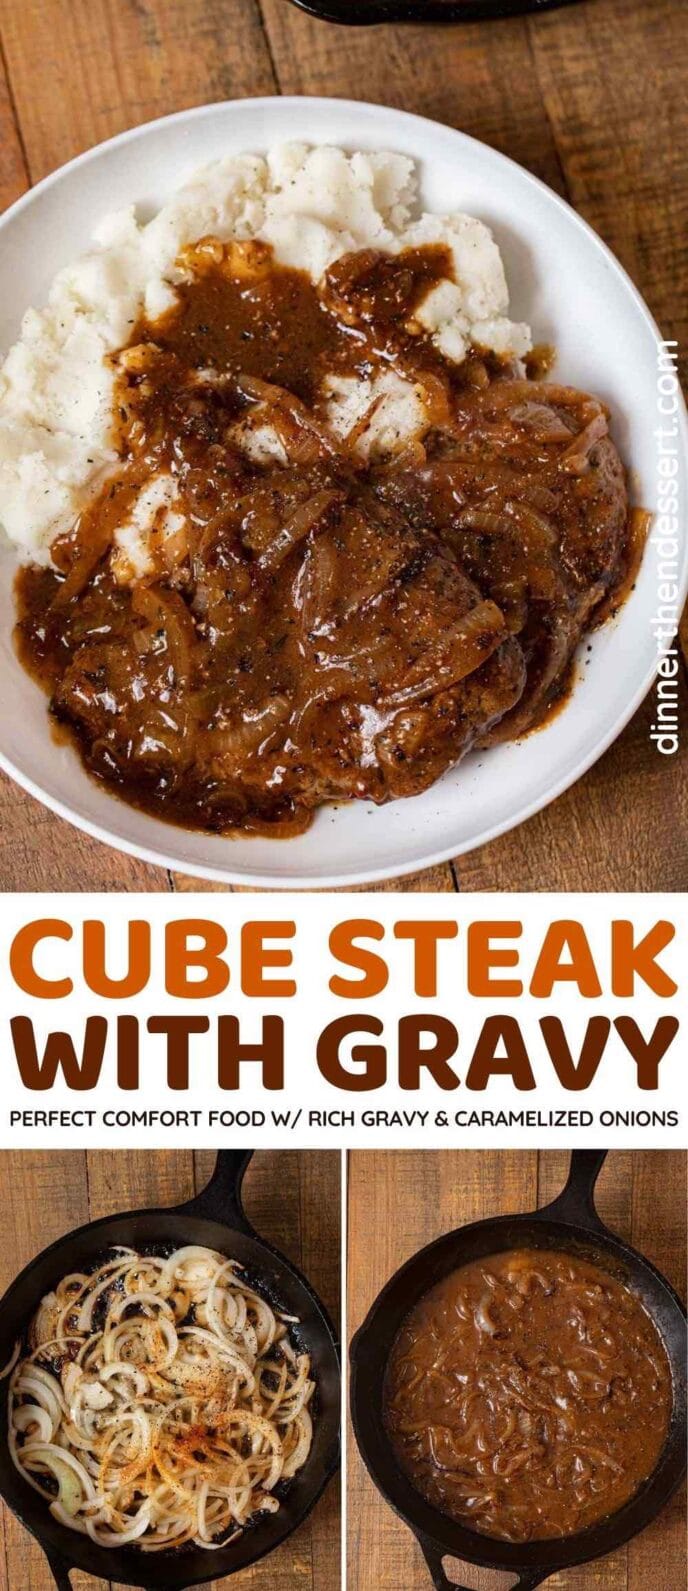 Cube Steak with Gravy collage